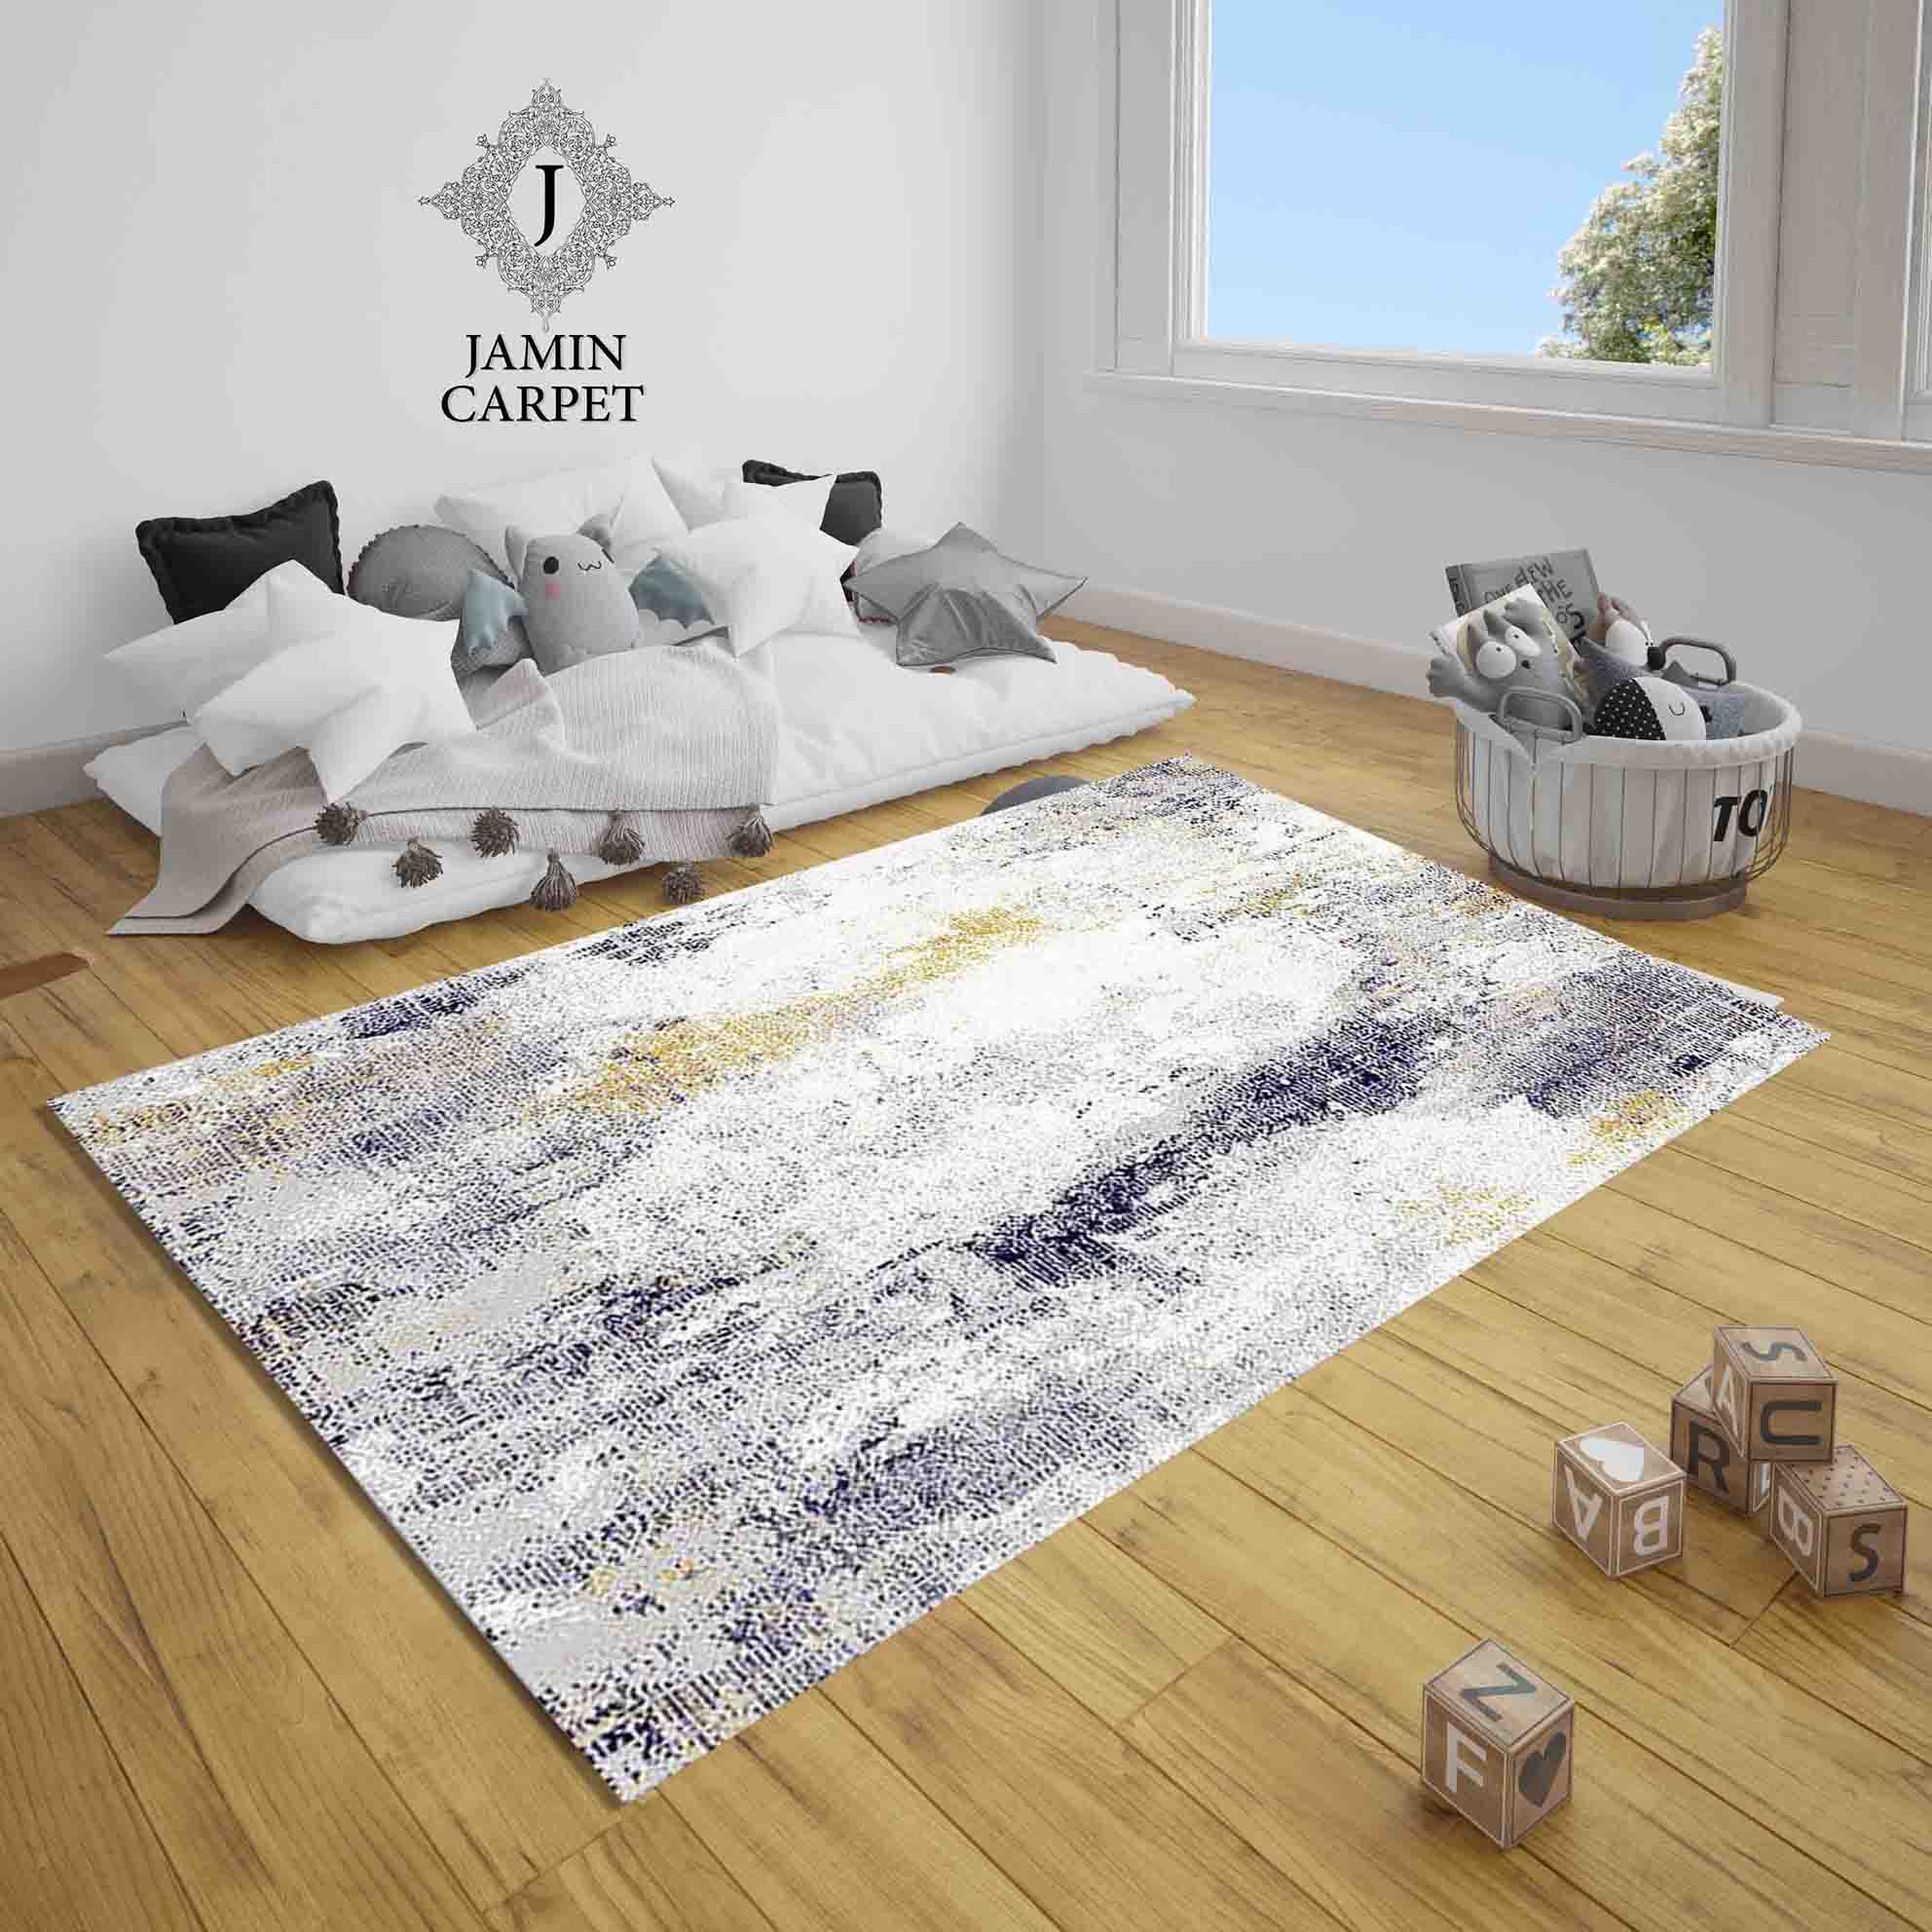 Fantasy carpet, code 272, comb 400, density 1800, all acrylic